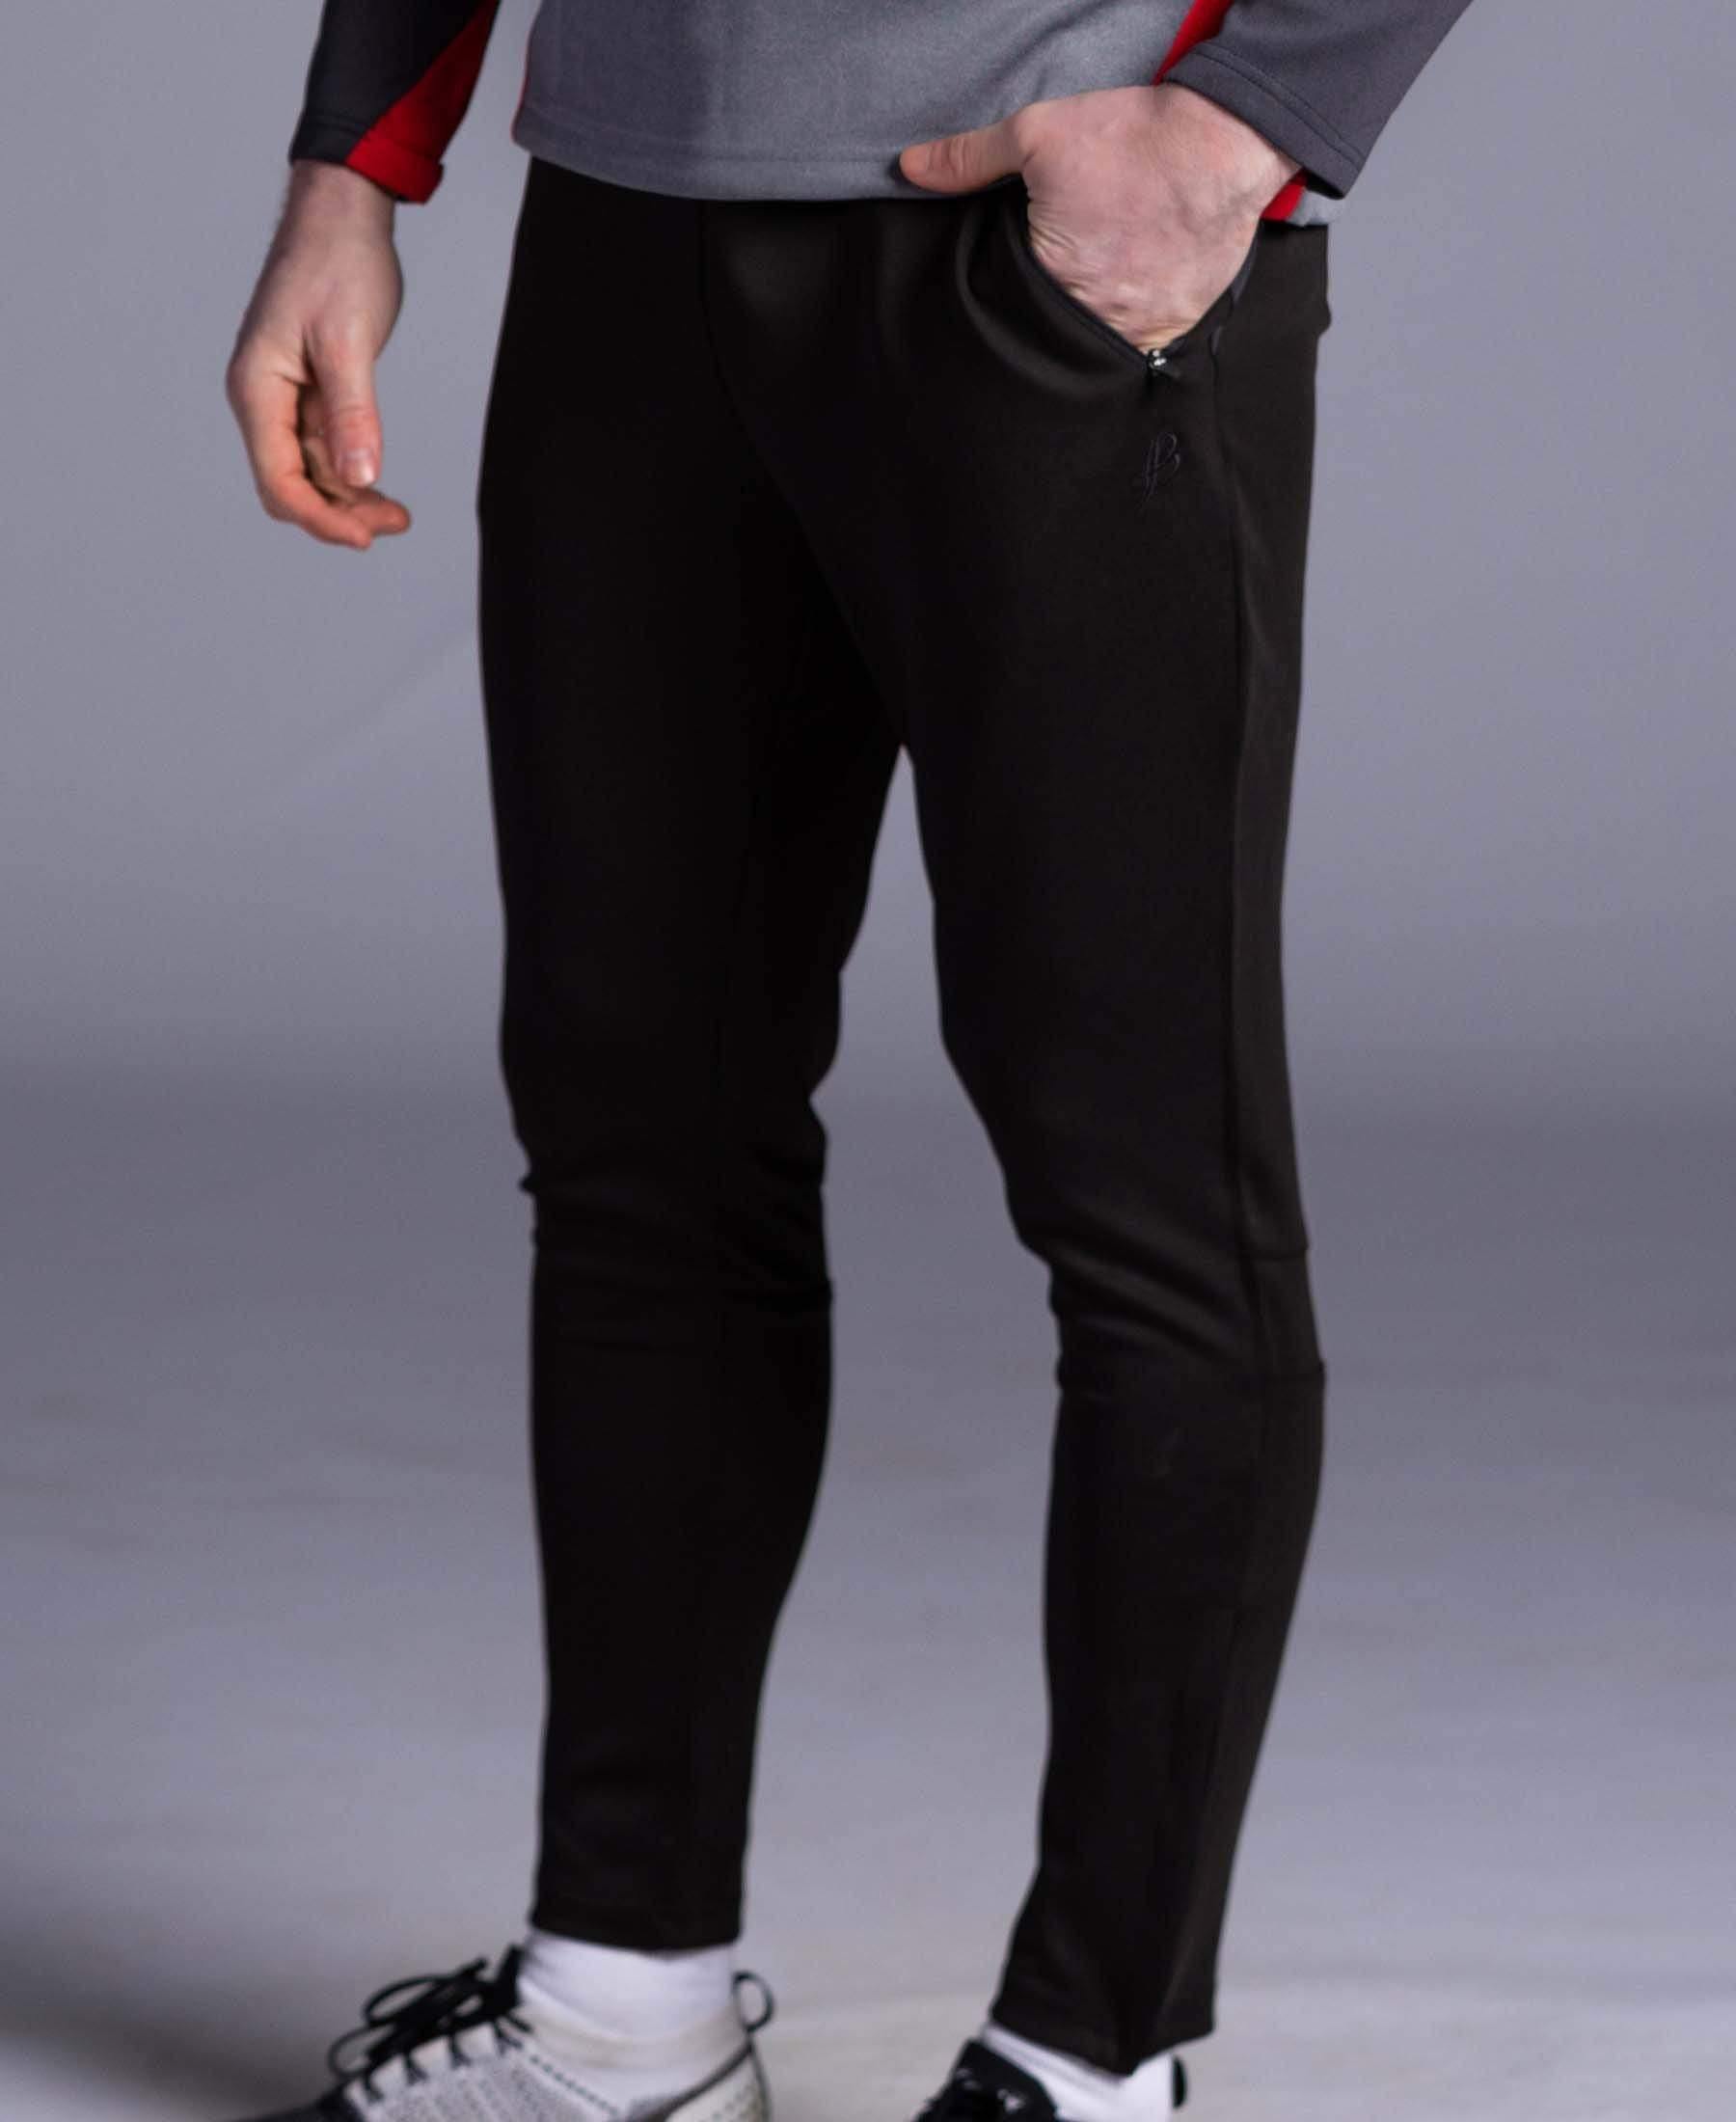 BUA20 Adult Skinny Pants (Black) - Bourke Sports Limited